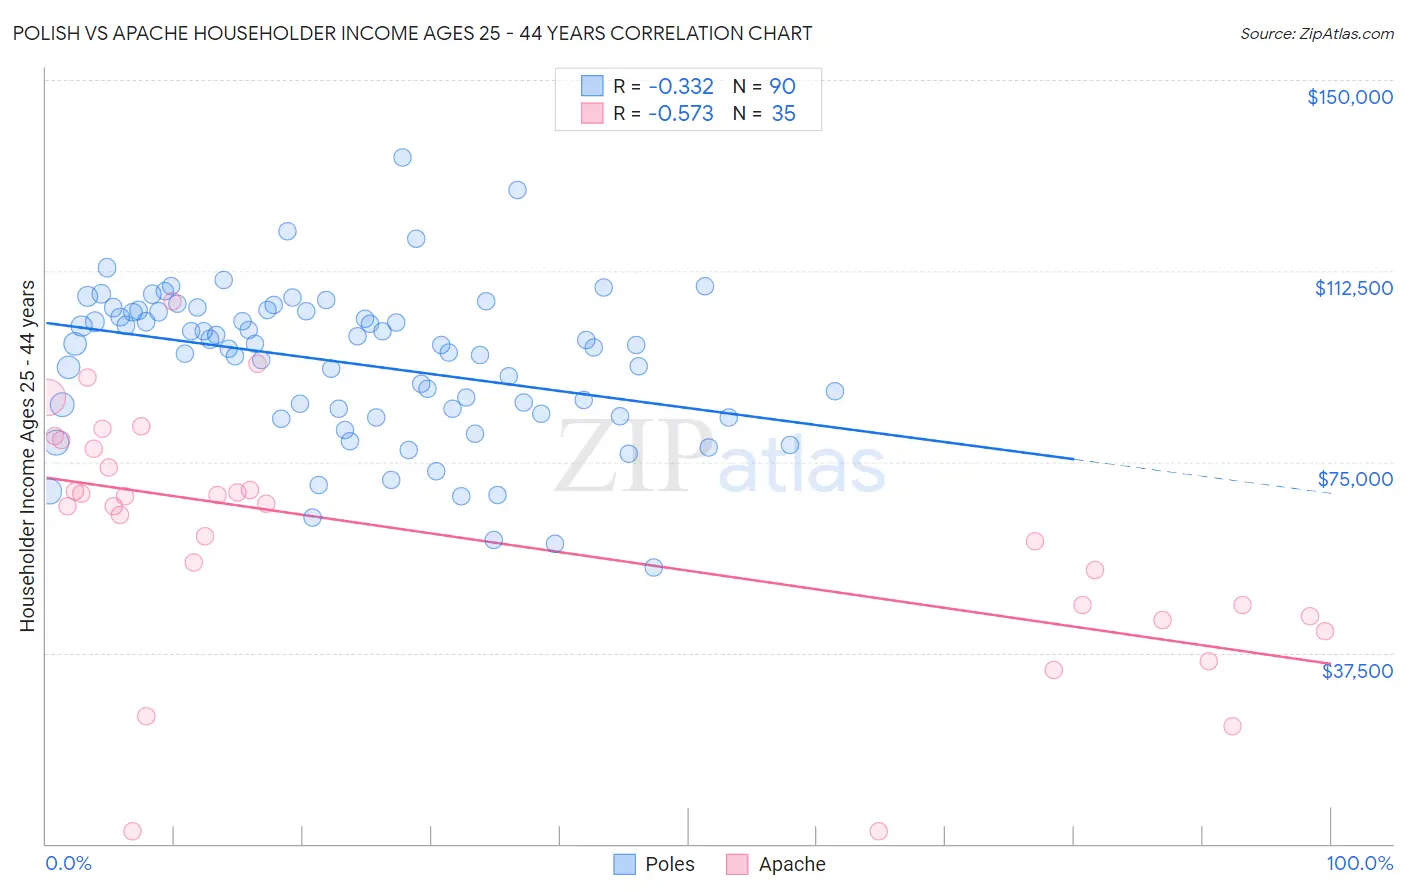 Polish vs Apache Householder Income Ages 25 - 44 years